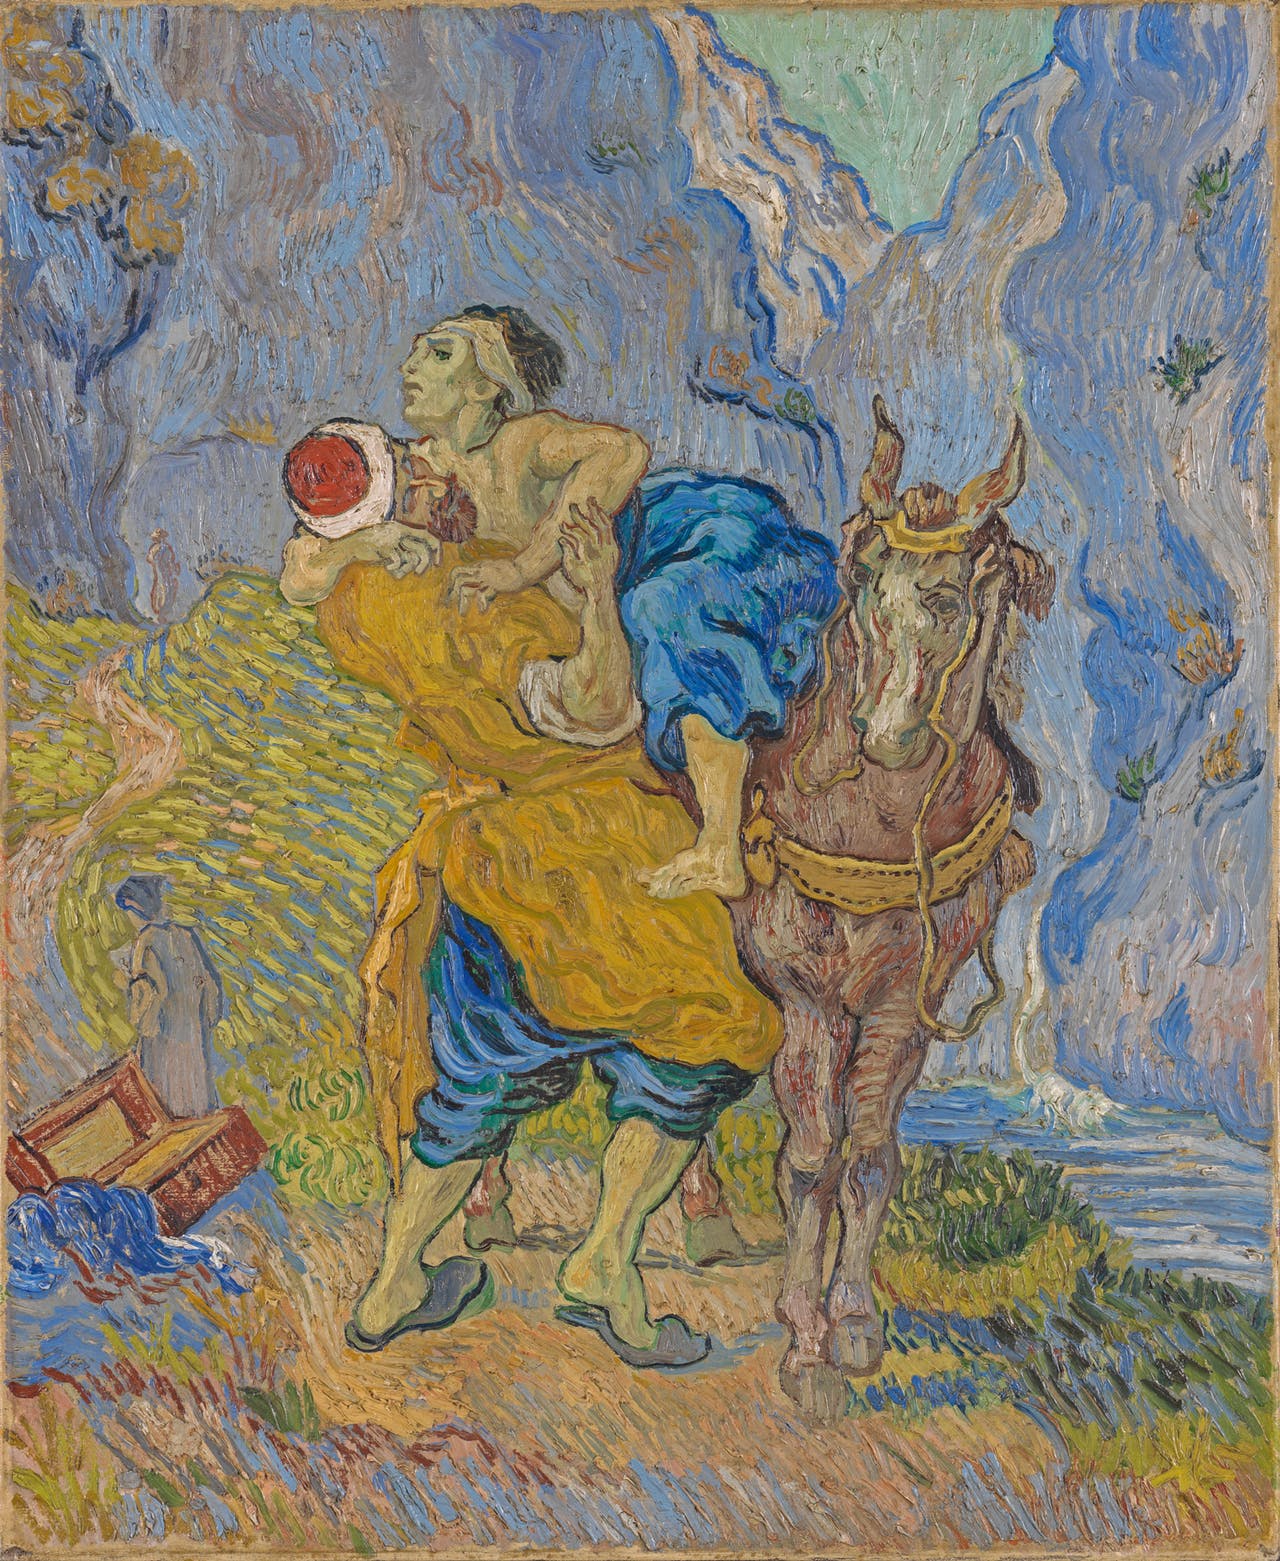 Barmhartige Samaritaan by Vincent Van Gogh - Begin mei 1890 - 73 × 59.5 cm Kröller-Müller Museum